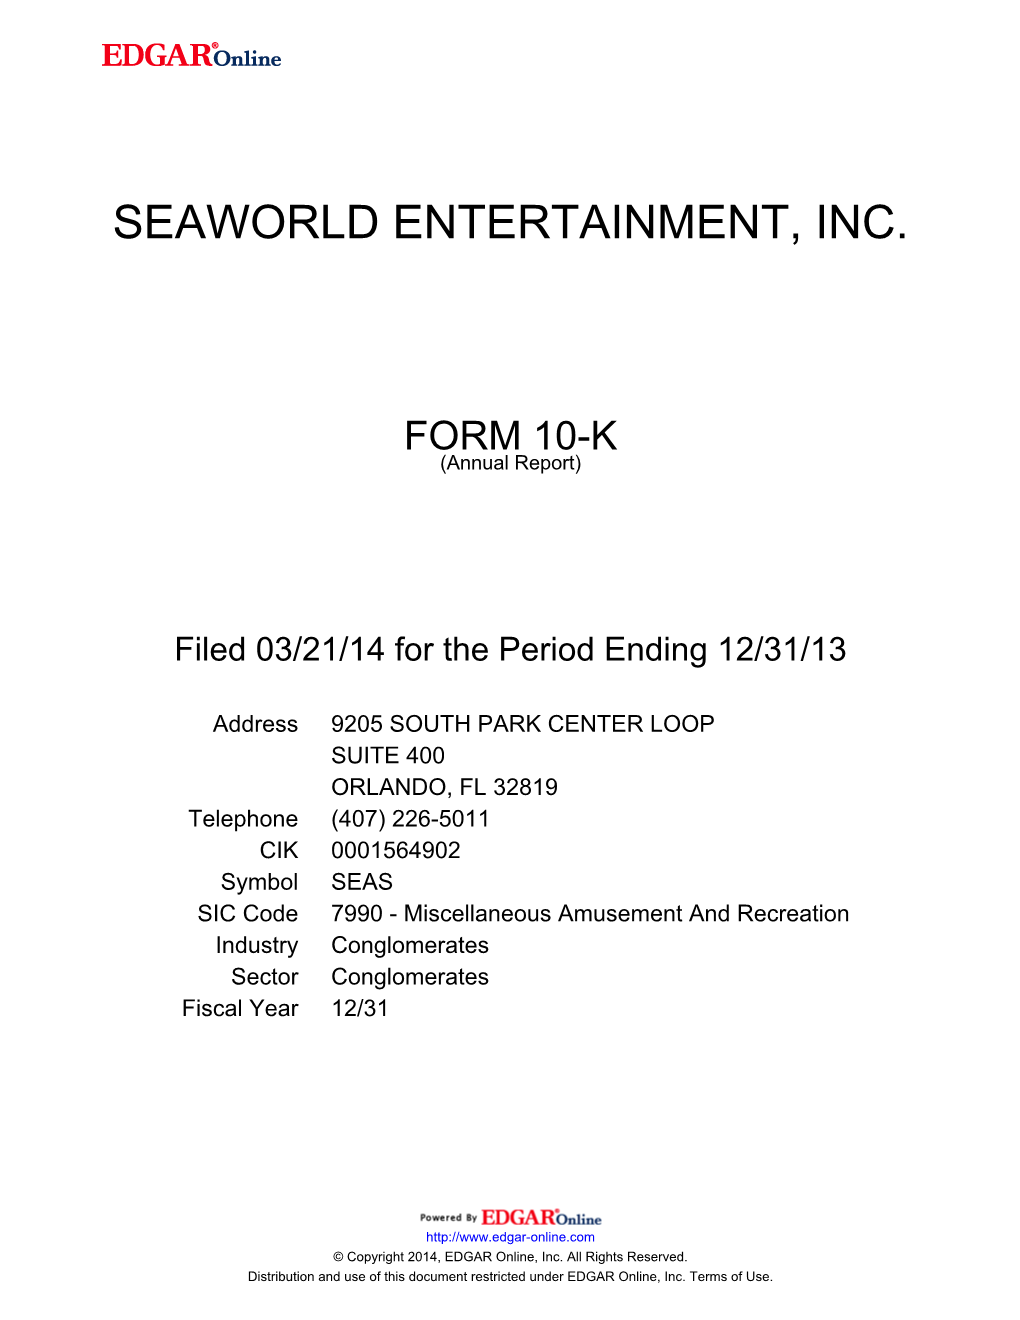 Seaworld Entertainment, Inc